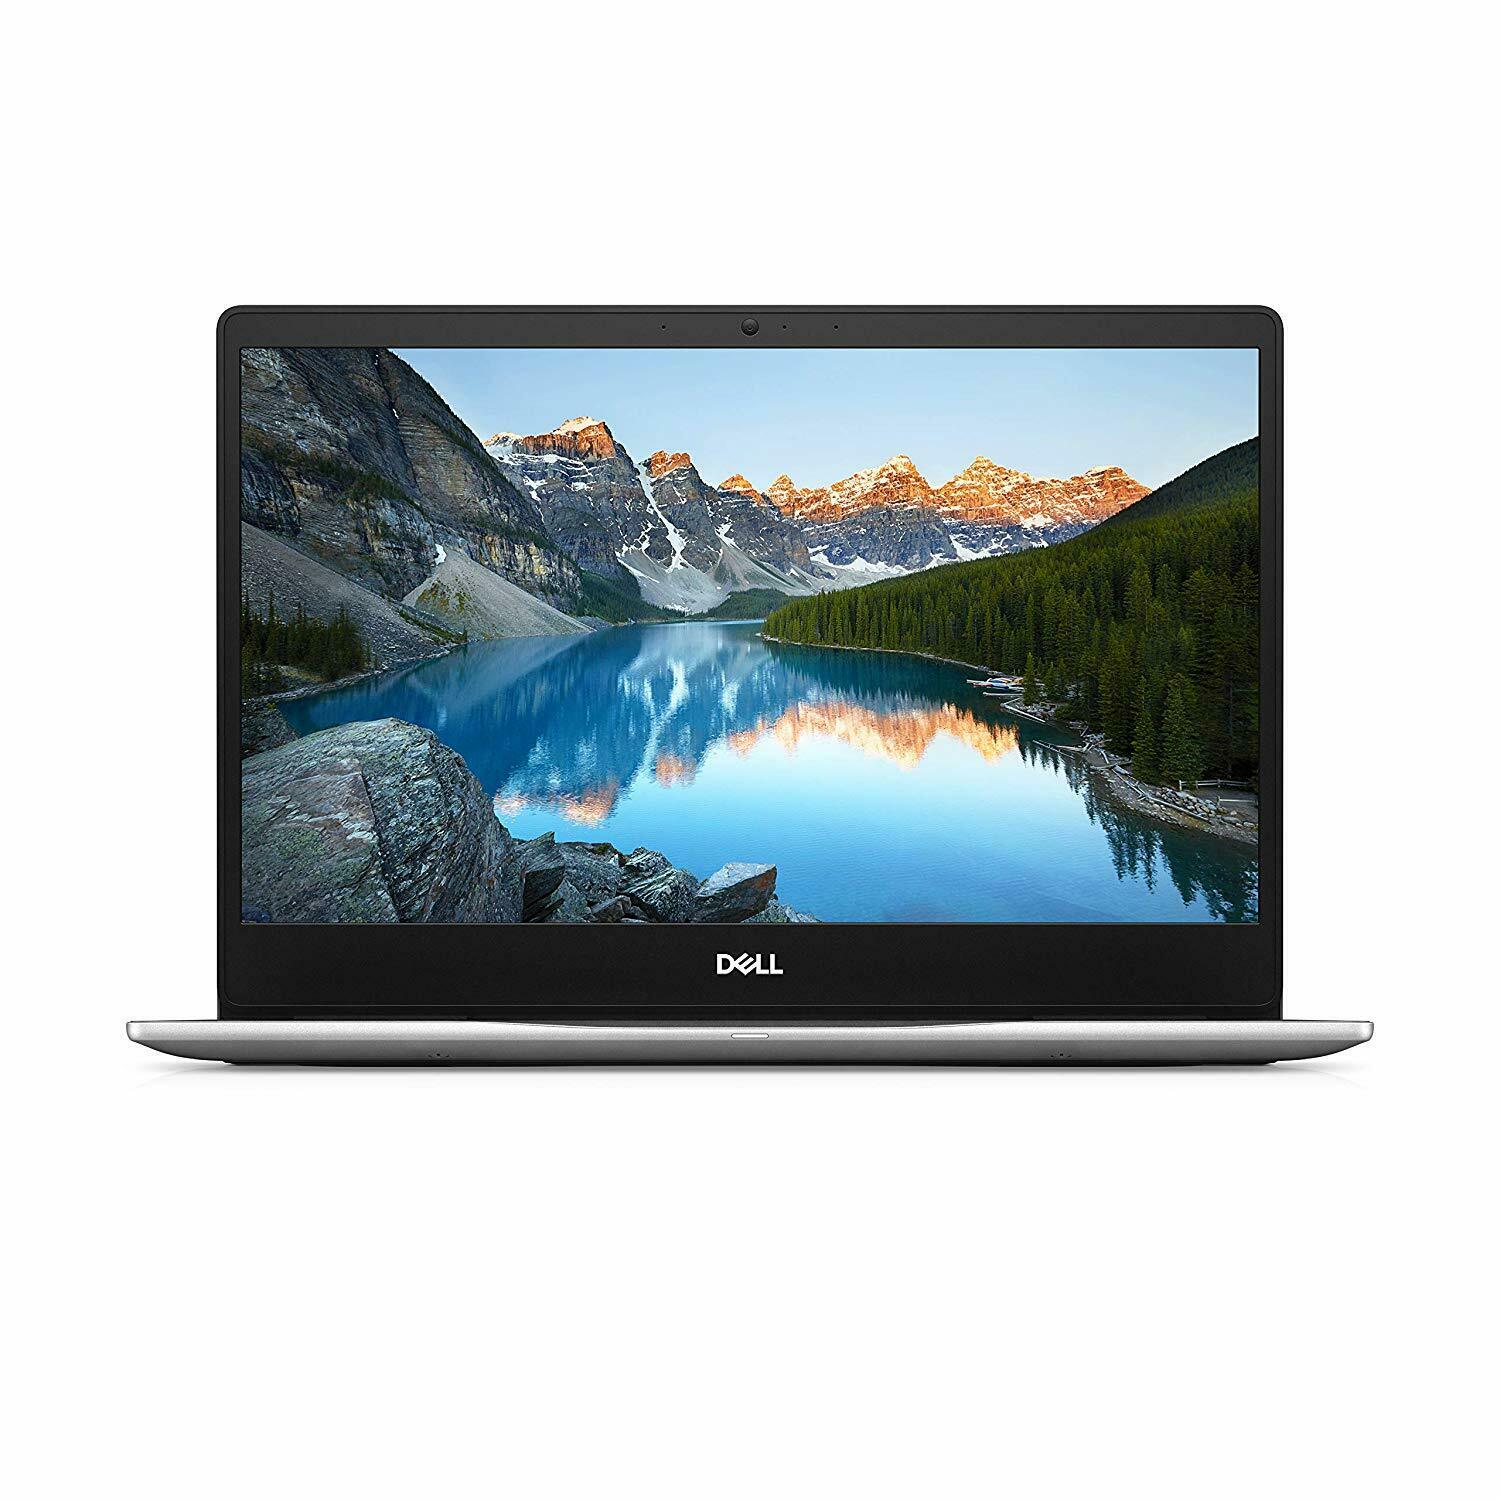 Dell Inspiron 13 7380 Laptop, Intel Core i7, 8GB RAM, 256GB SSD, 13.3” Full HD, Silver